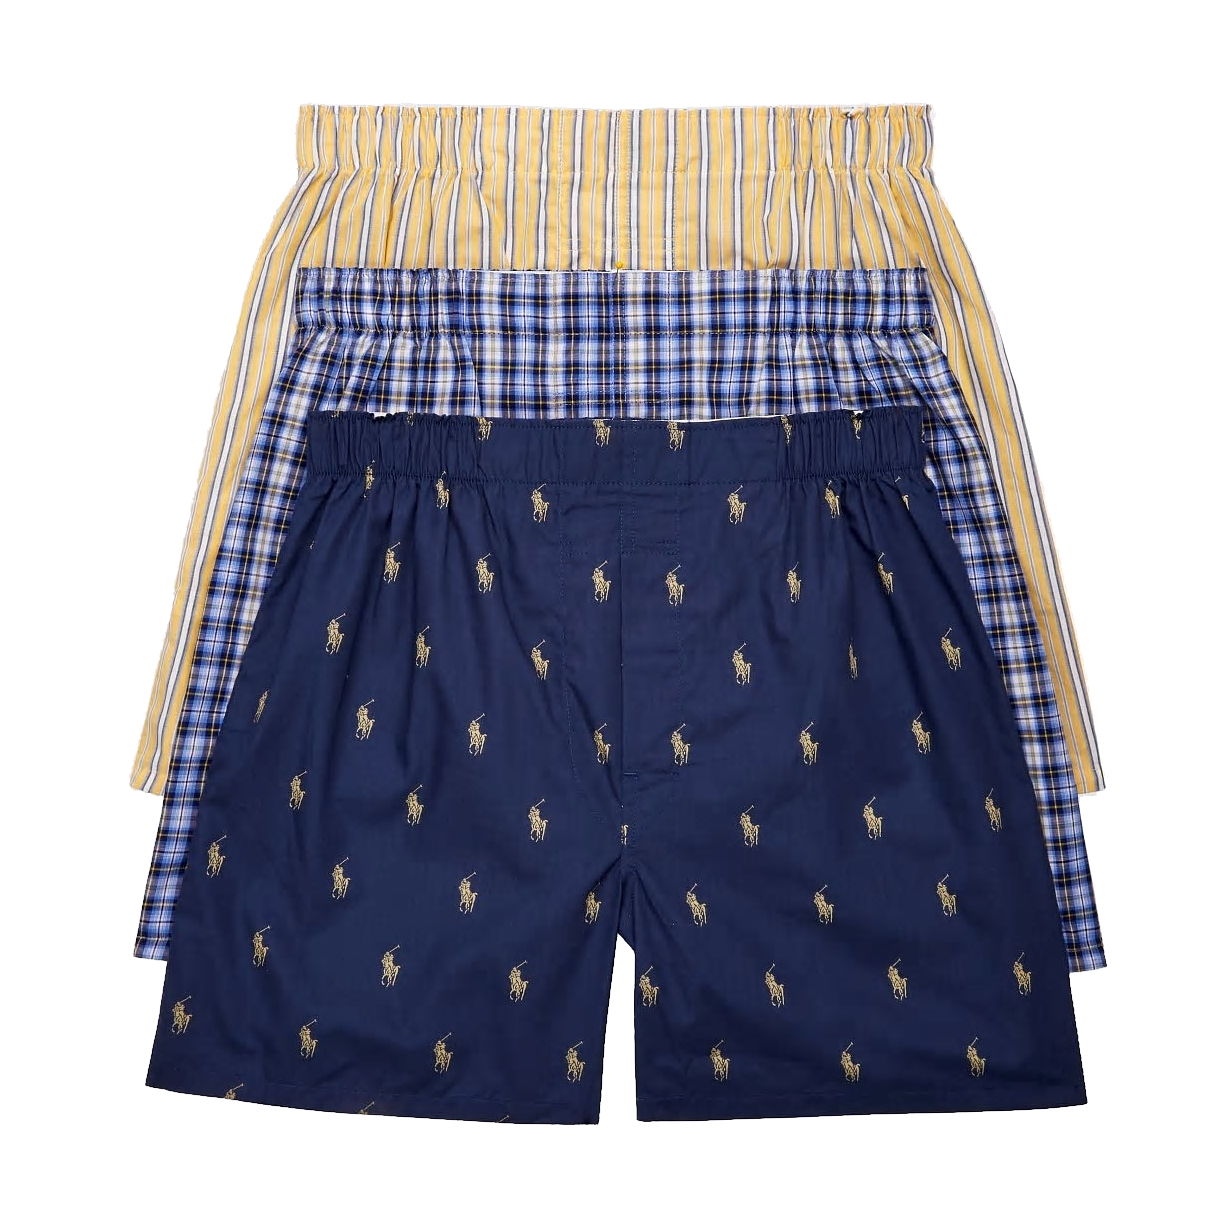 Ralph Lauren Polo Ralph Lauren Mens Navy/Yellow/Blue Classic Fit Woven Cotton Boxers $42